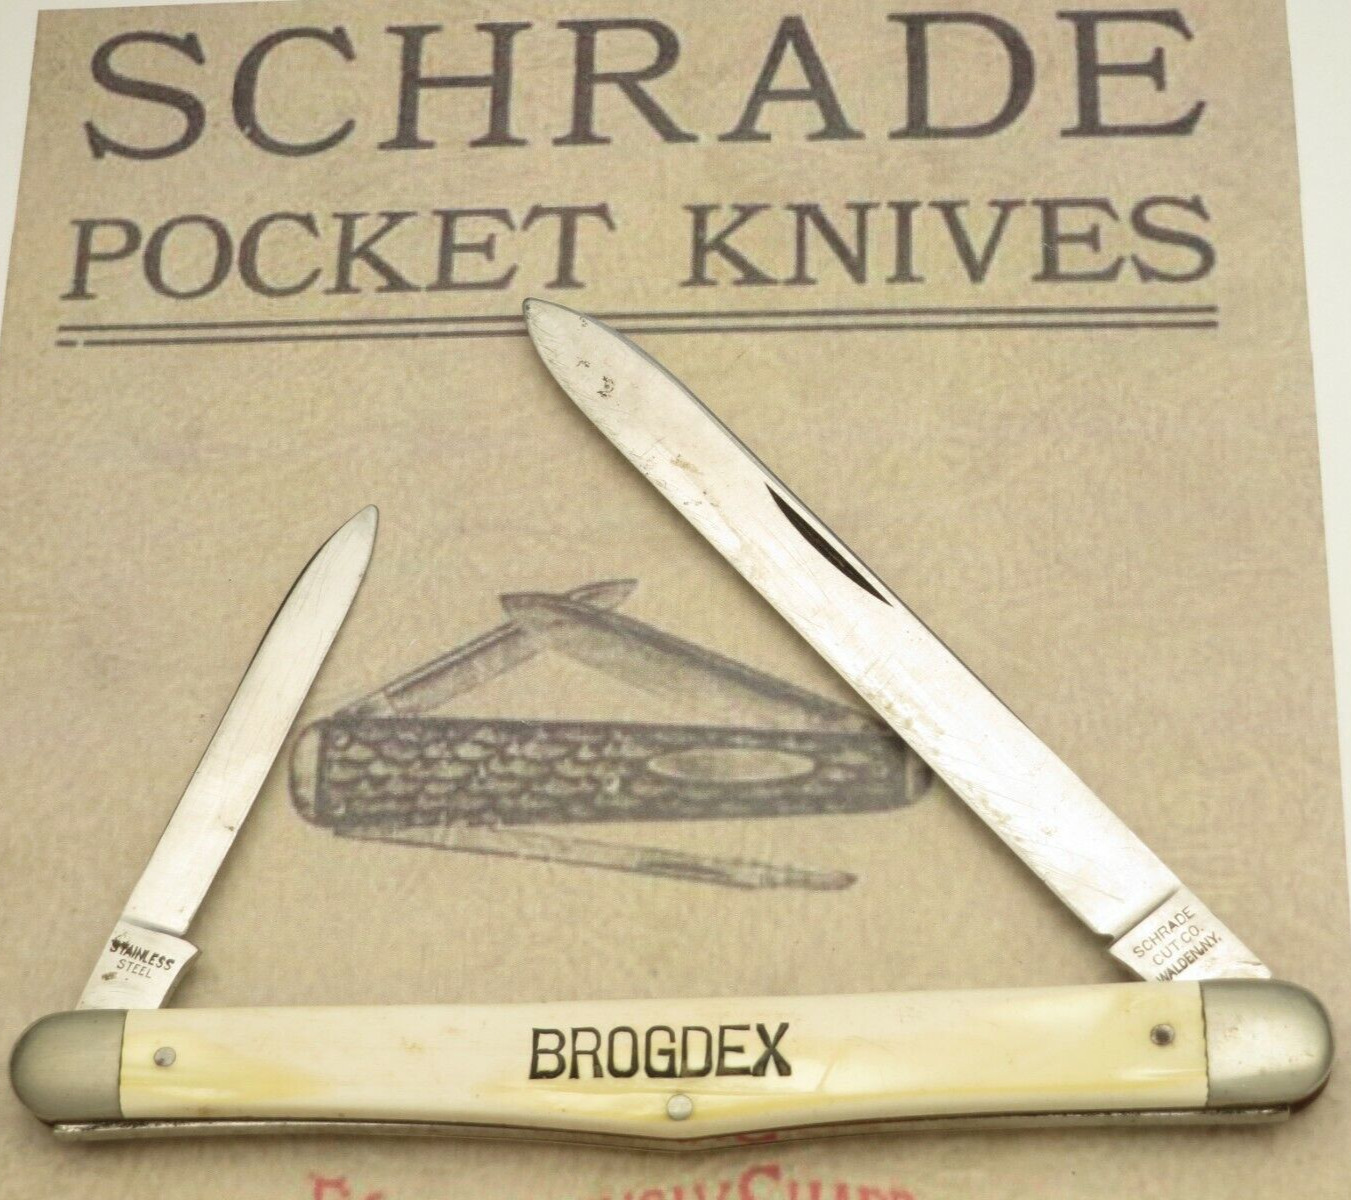 Antique Schrade Cut Co Walden NY Pre WWII Melon Tester or Sausage Sampler Knife 